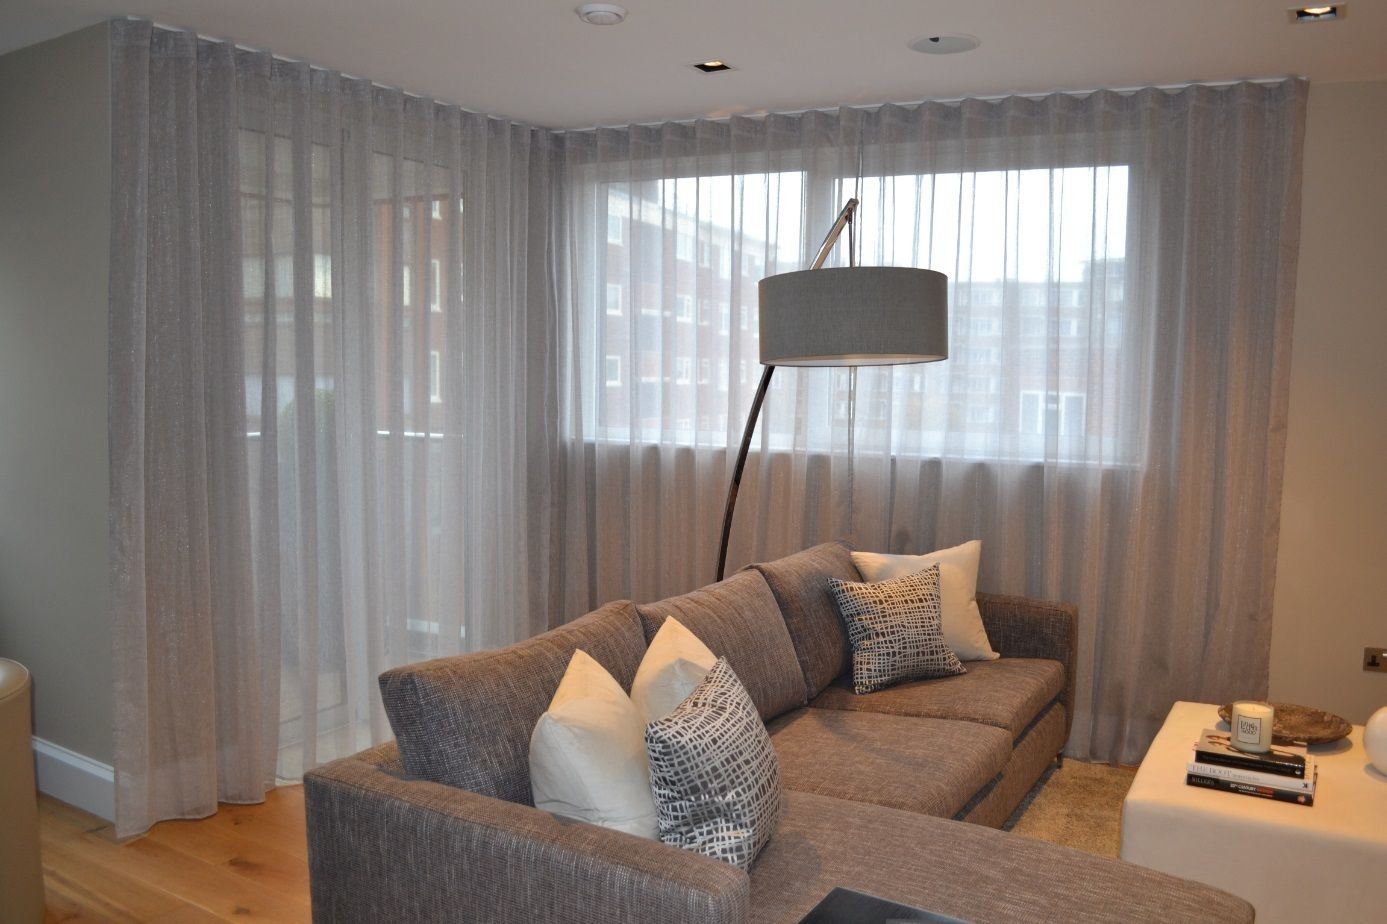 Simplistic Sheer Curtains with Wave Style Pleats International Soft Furnishers Puertas y ventanas de estilo moderno Cortinas